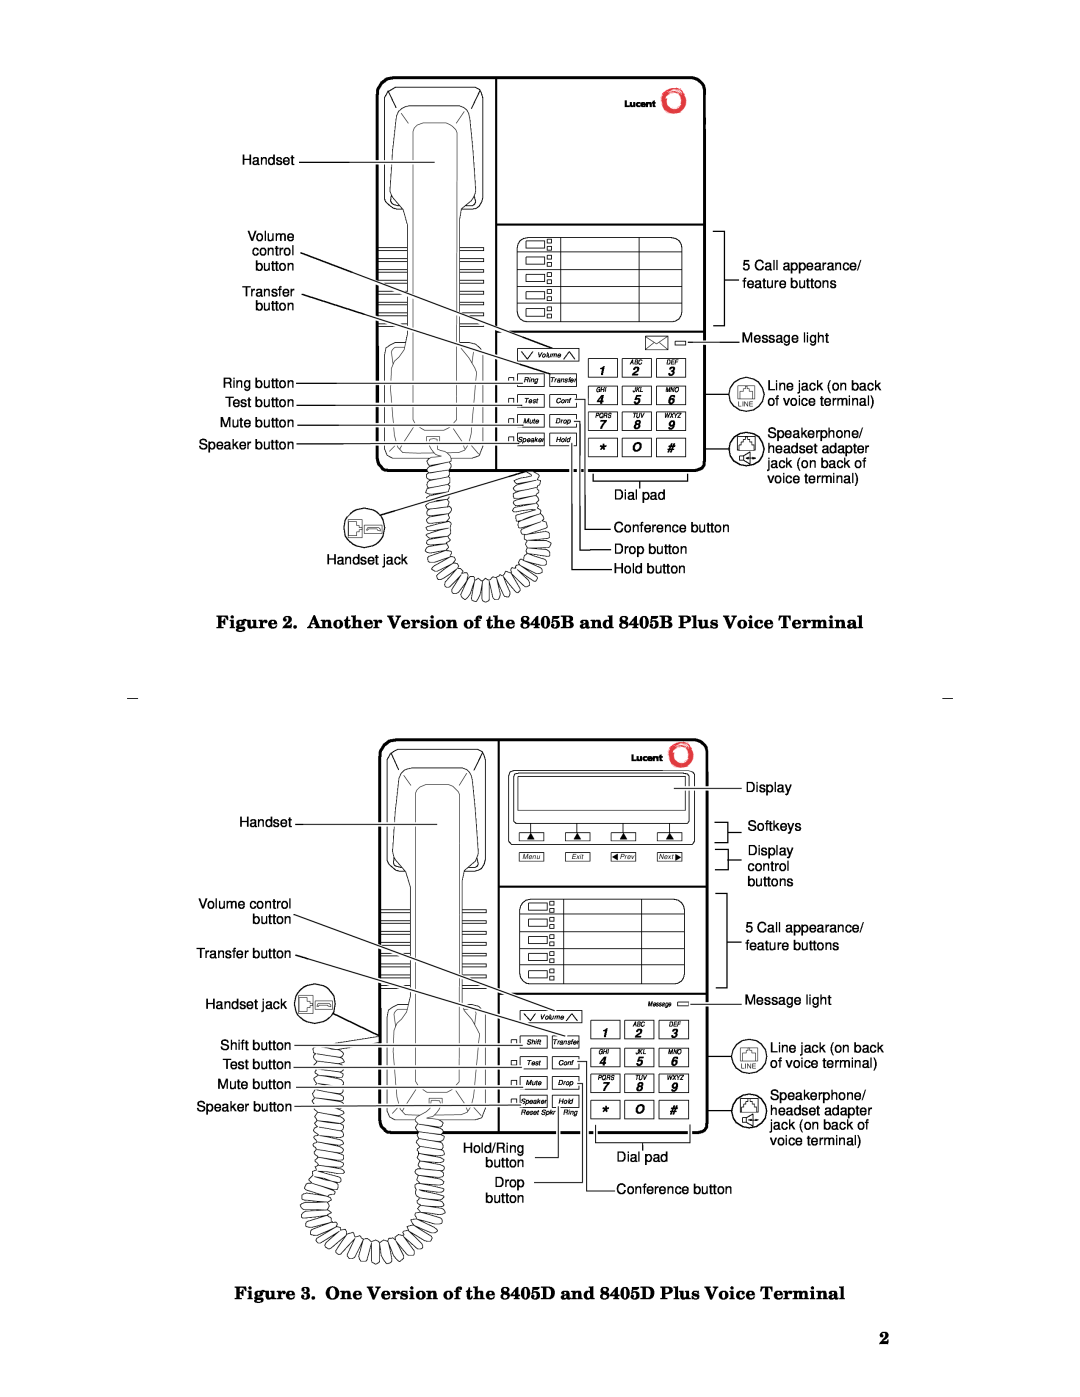 Lucent Technologies 8405 Handset, Volume, control, Transfer, Ring button, Test button, Mute button, Speaker button 